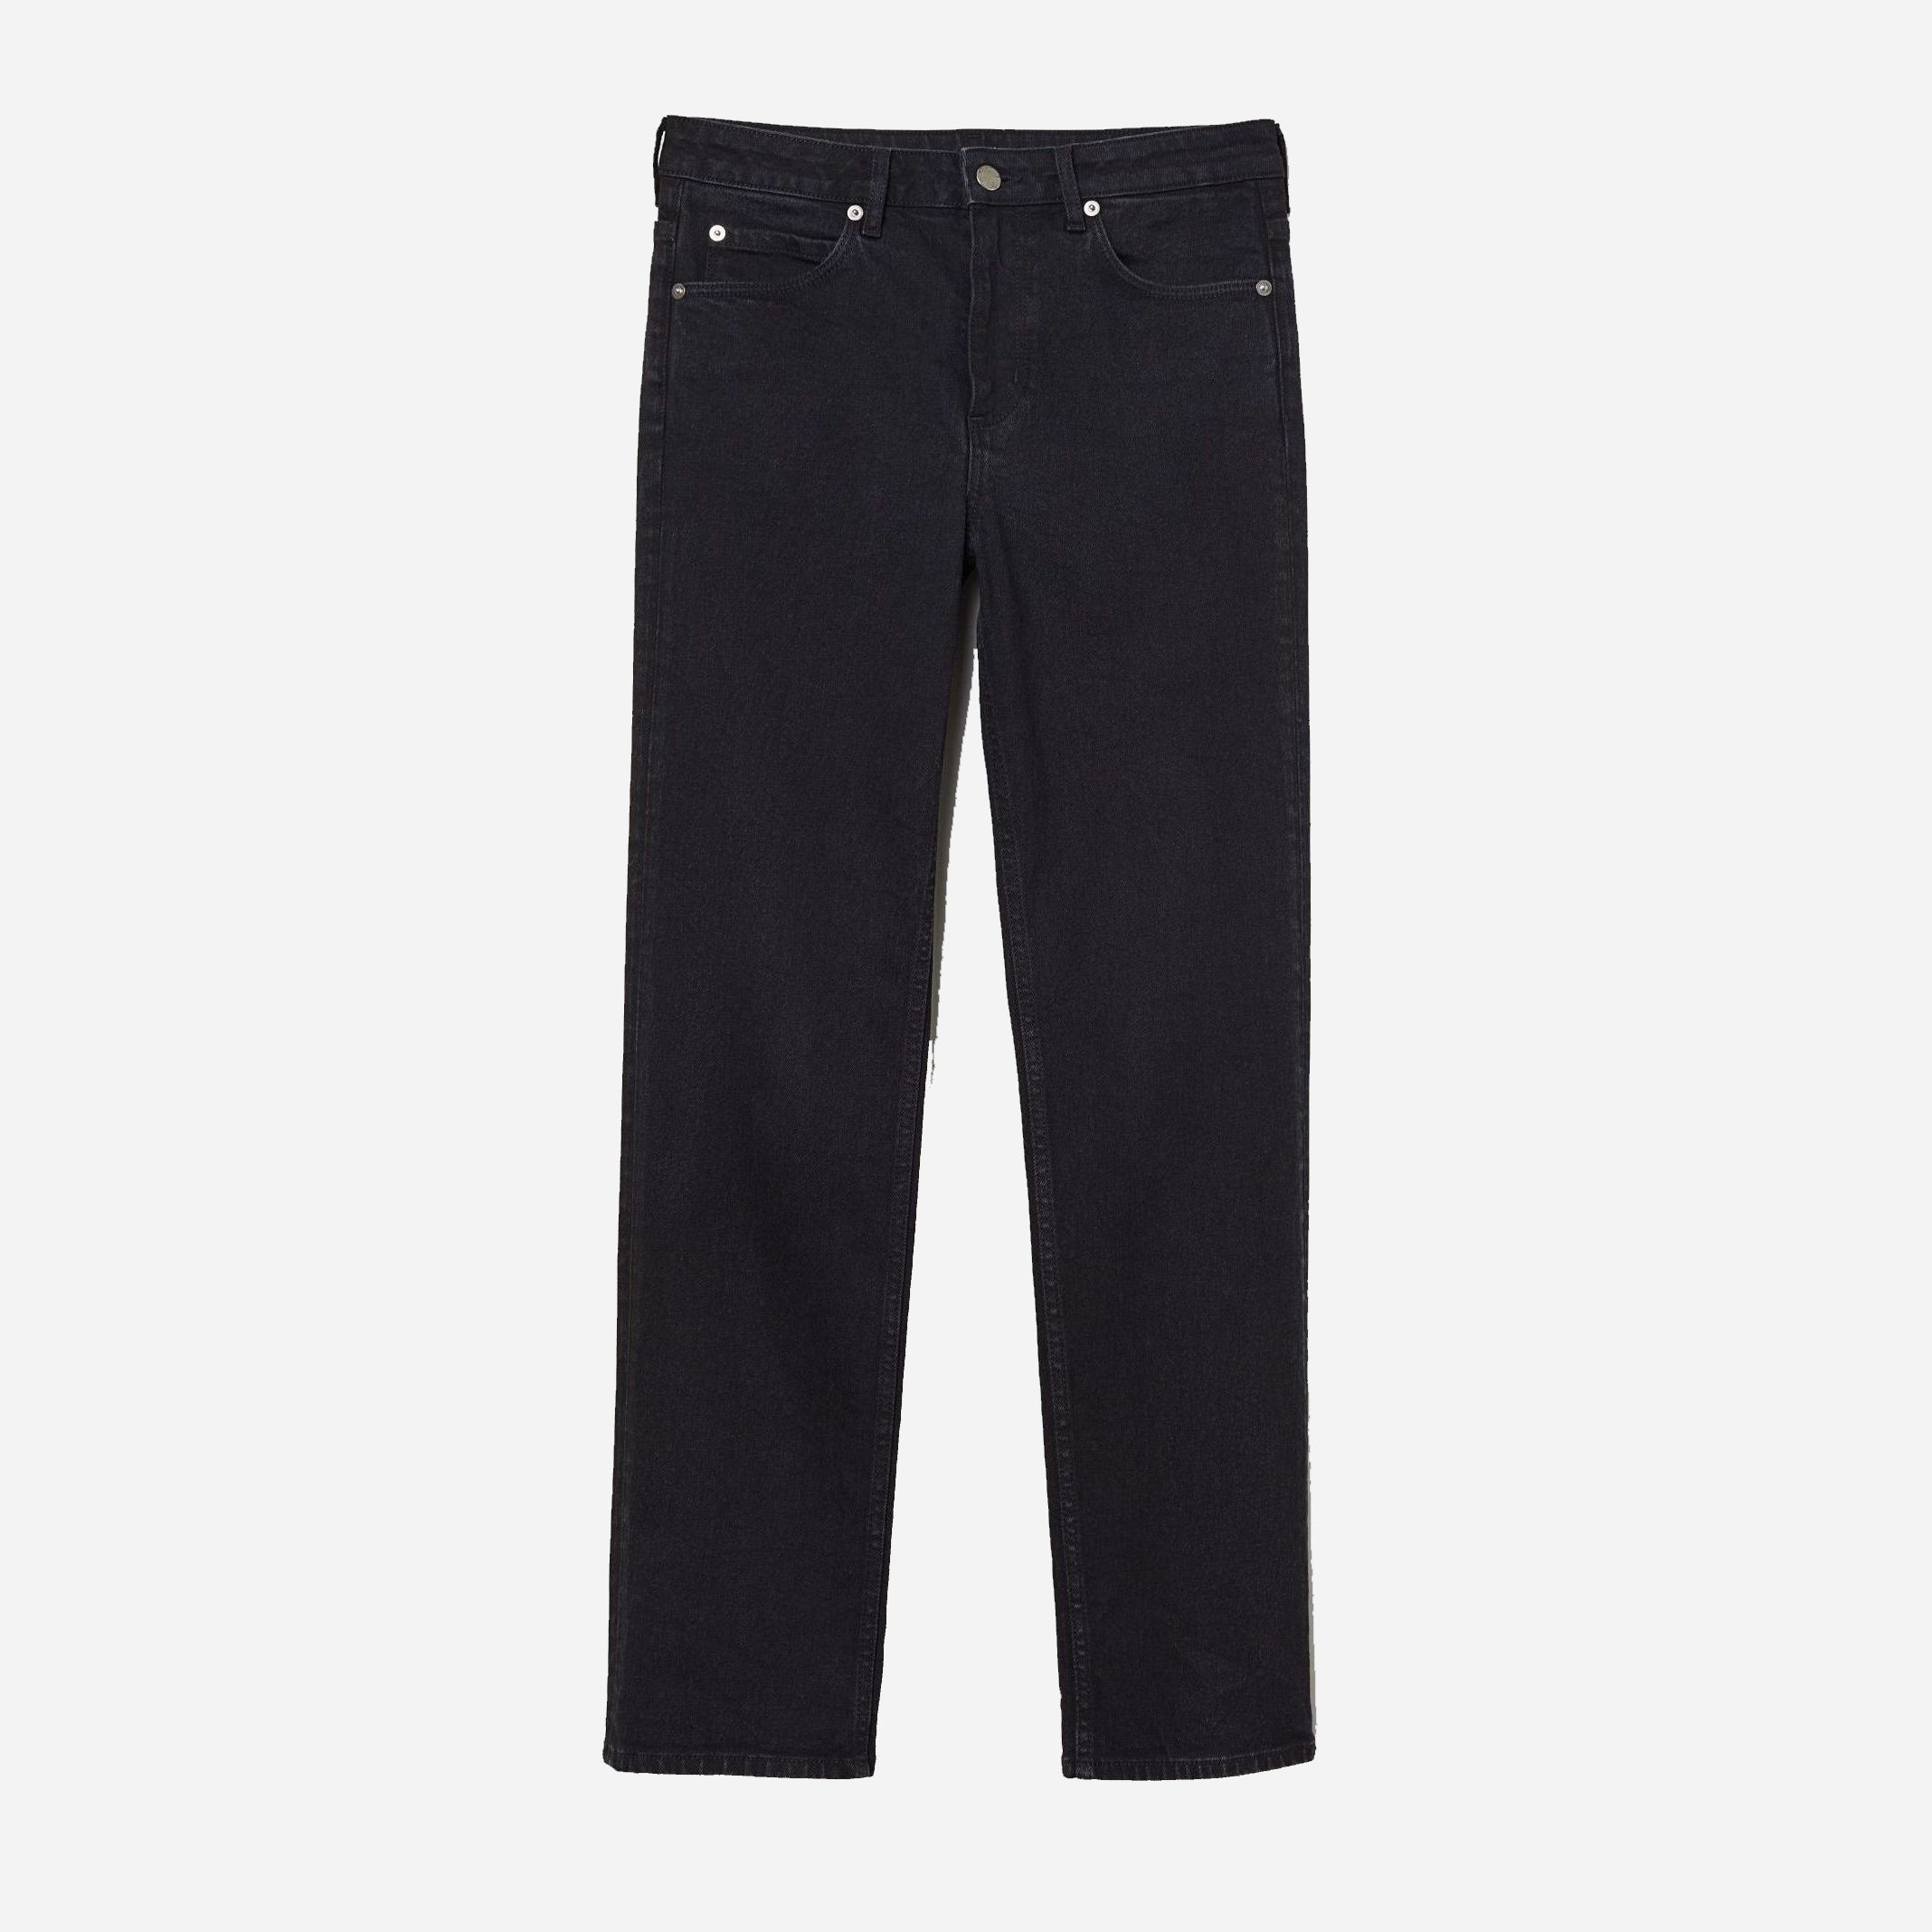 Pants Solid Hipster Plus Size Hip-pop Streetwear Thicker – shopendeal   Серые наряды, Модные брюки, Наряд со спортивными штанами